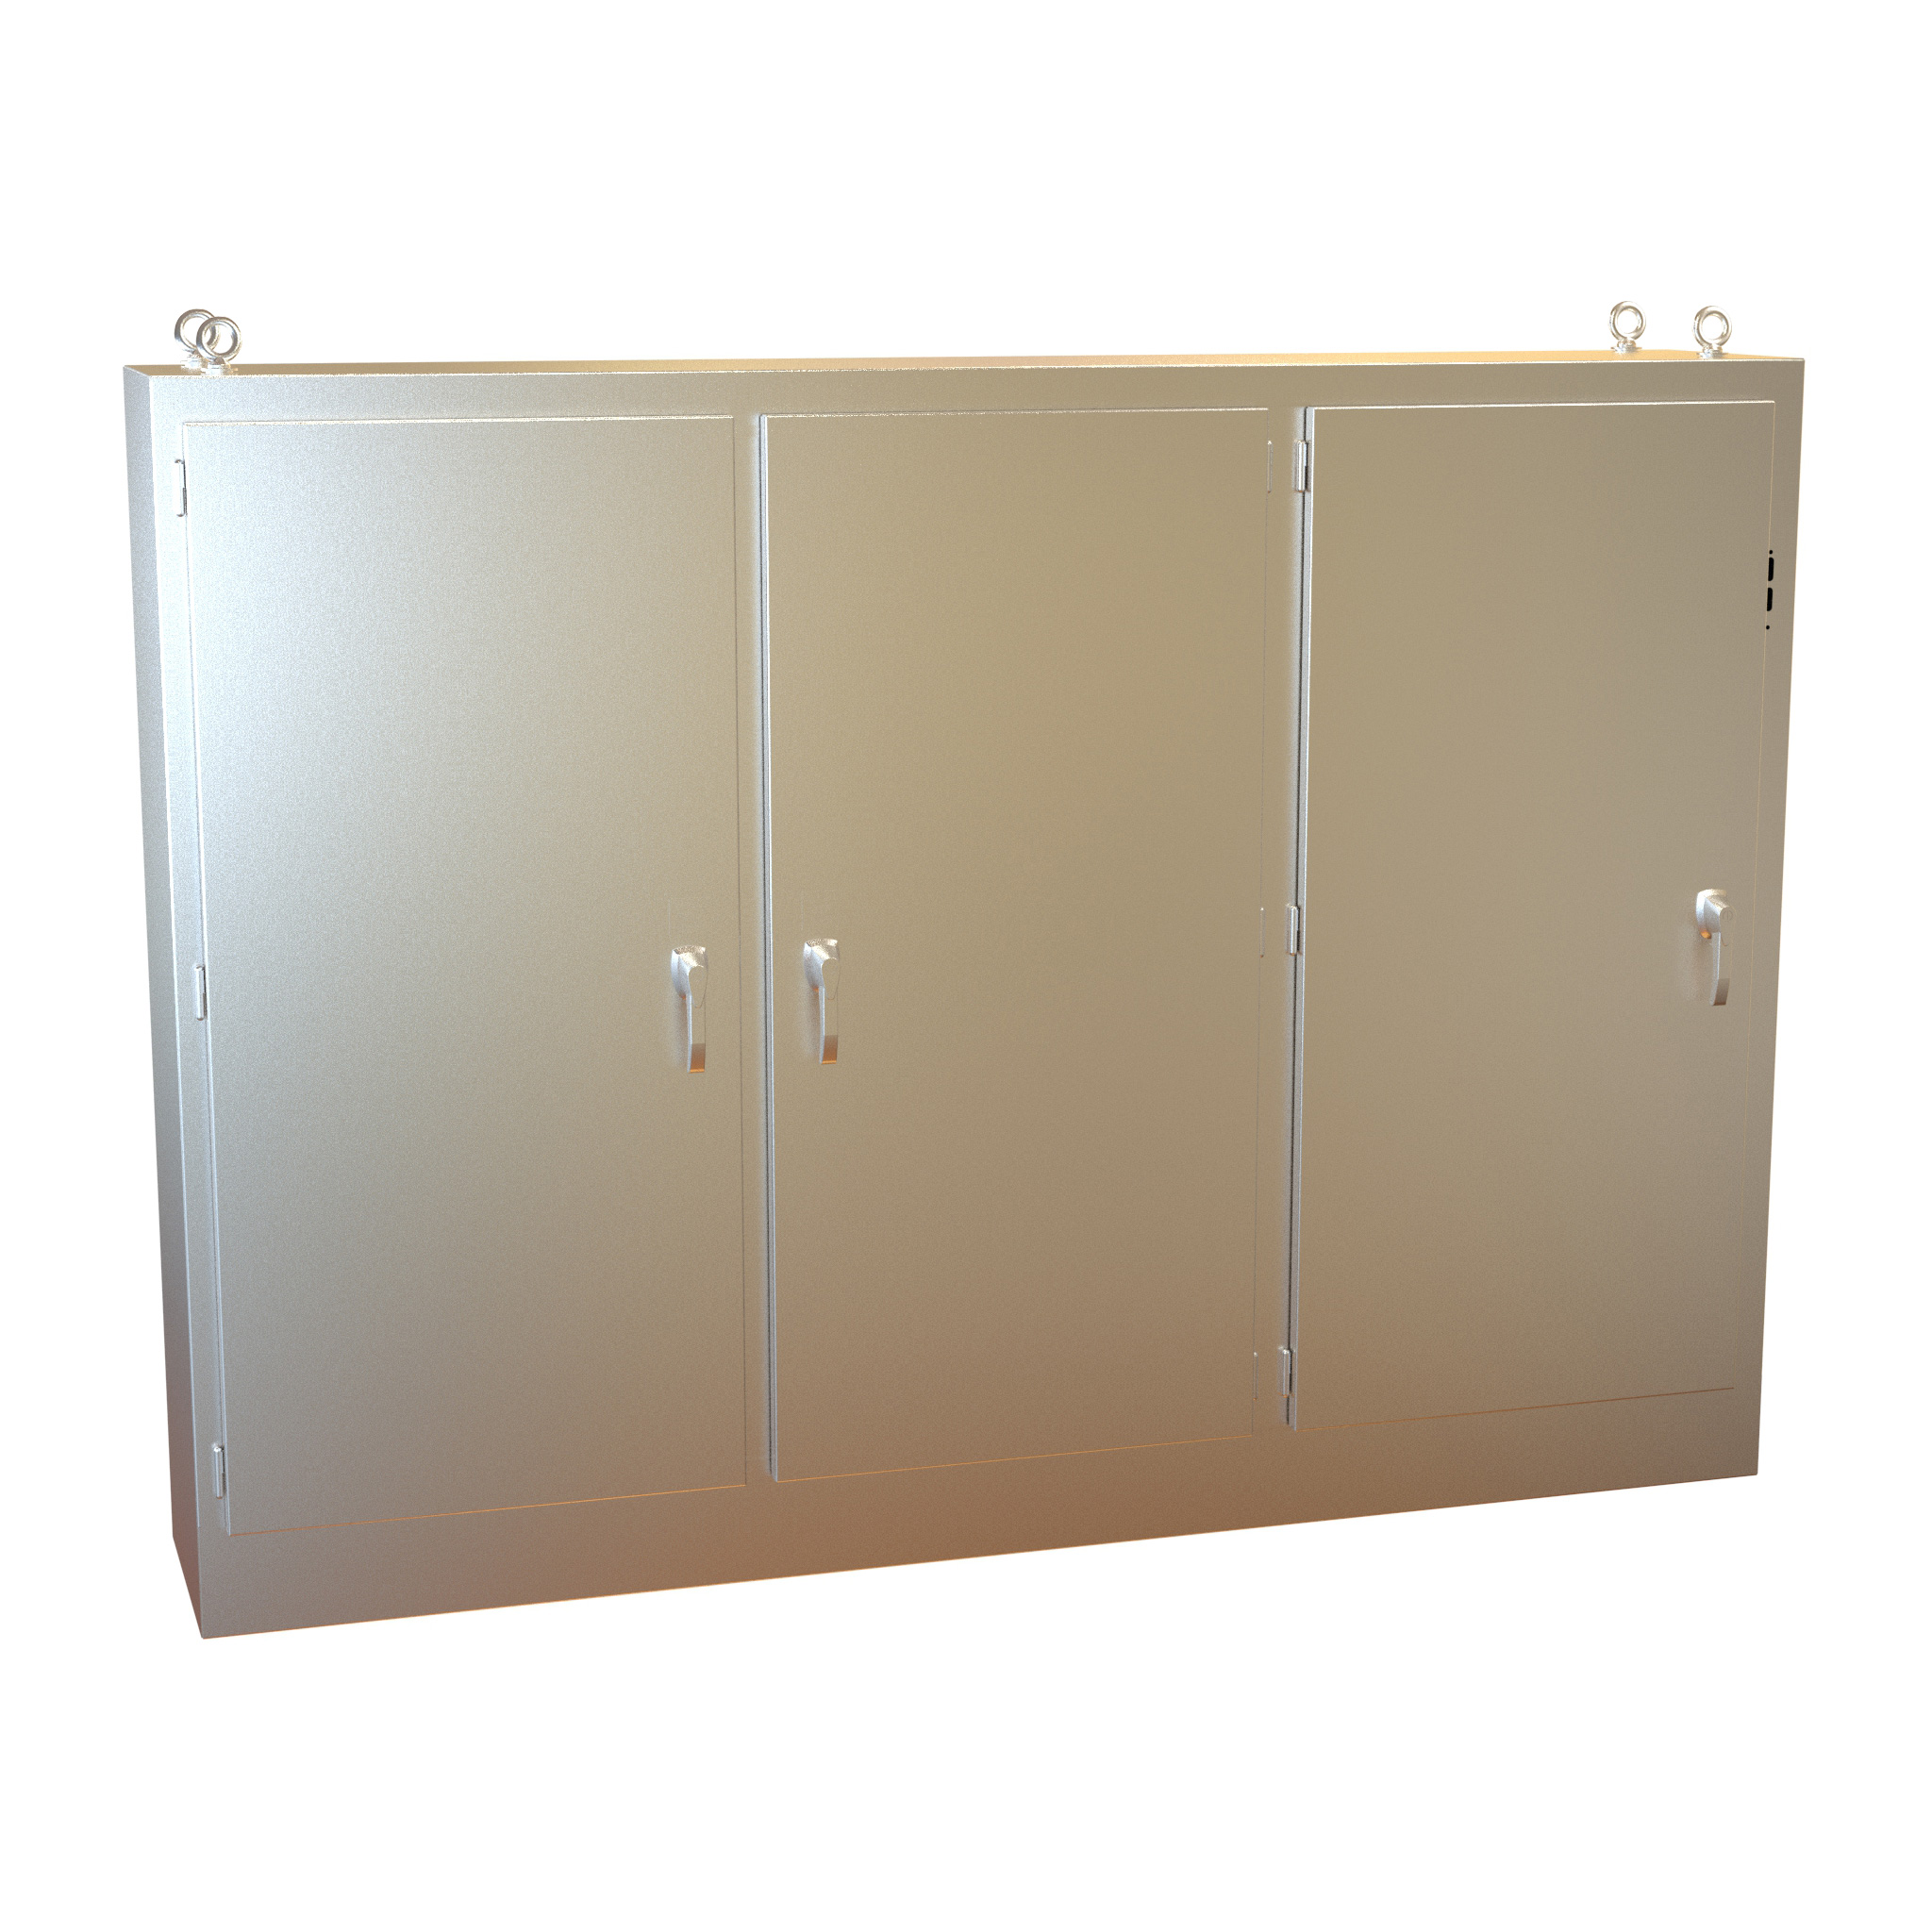 Type 4X Stainless Steel Multi-Door Freestanding Disconnect Enclosure UHD SS Series